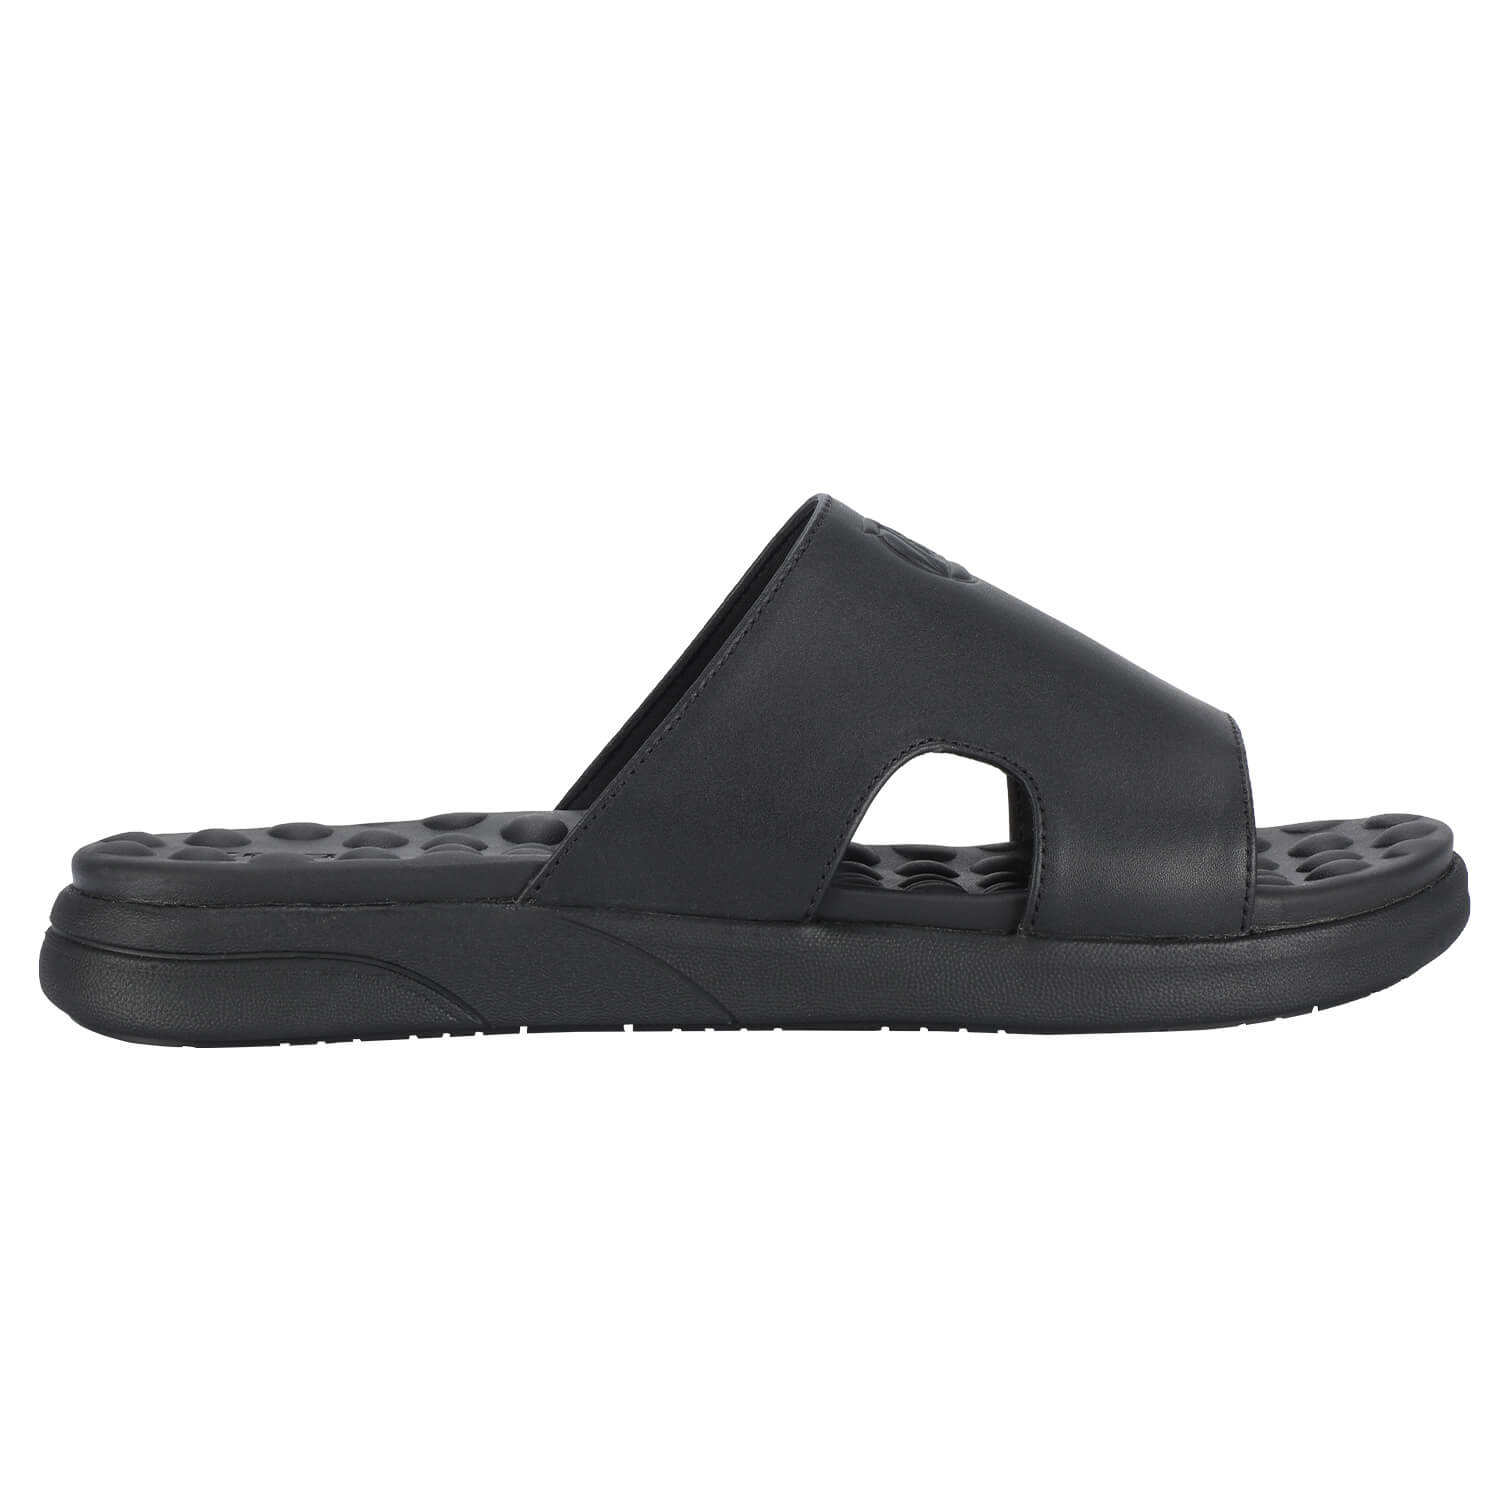 Black Massaging Leather Sandals (Sizes 7-16 Available) – Zeba Shoes